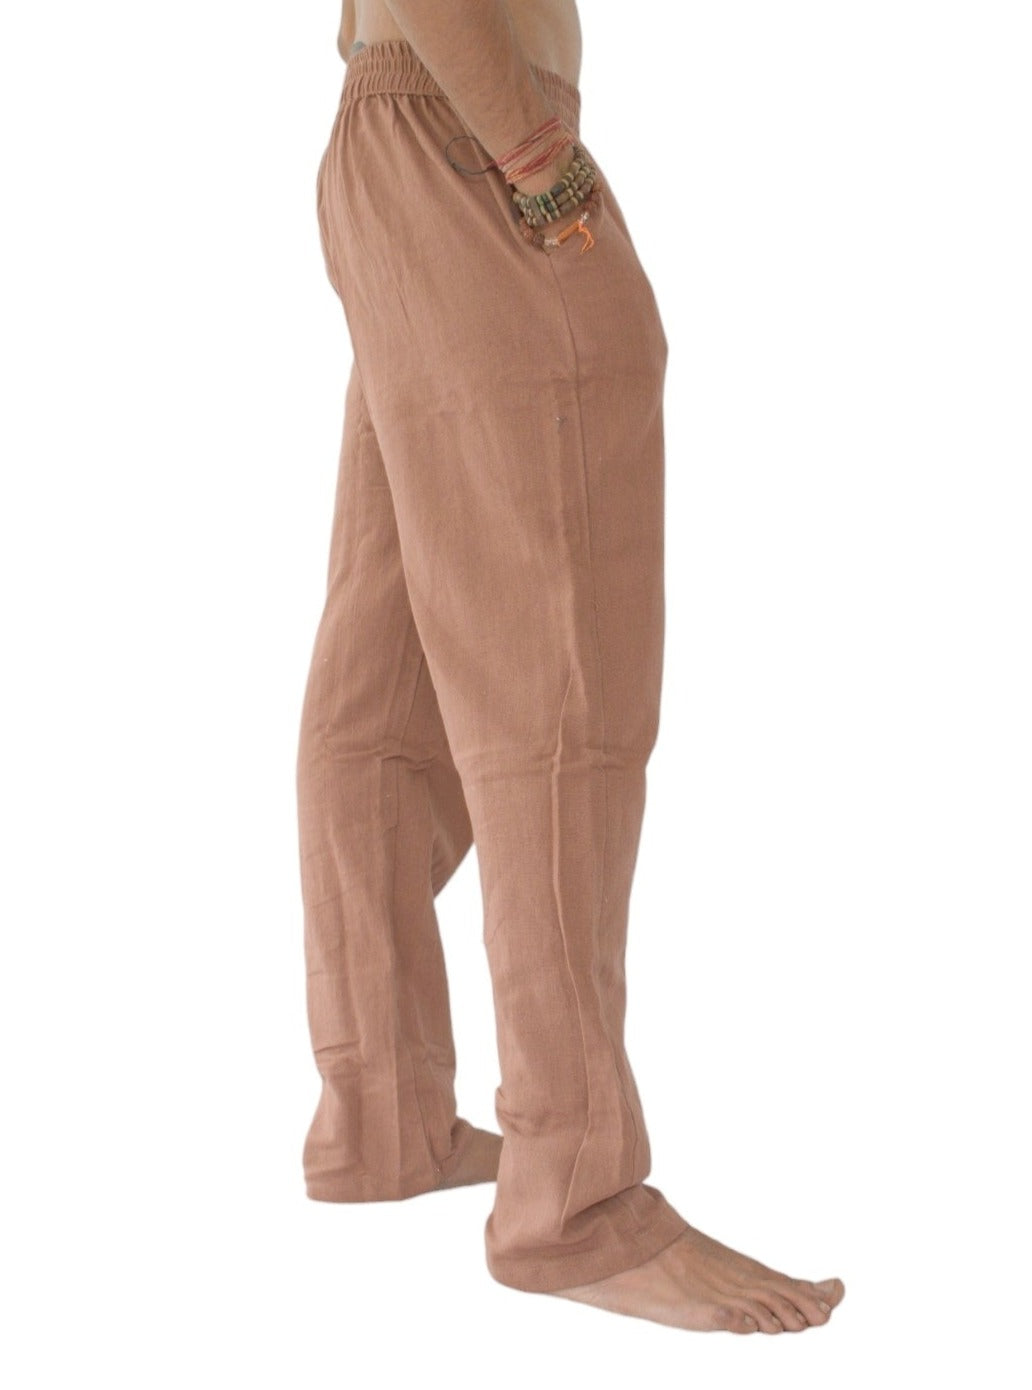 Terracotta Unisex Organic Cotton Free Size Trousers